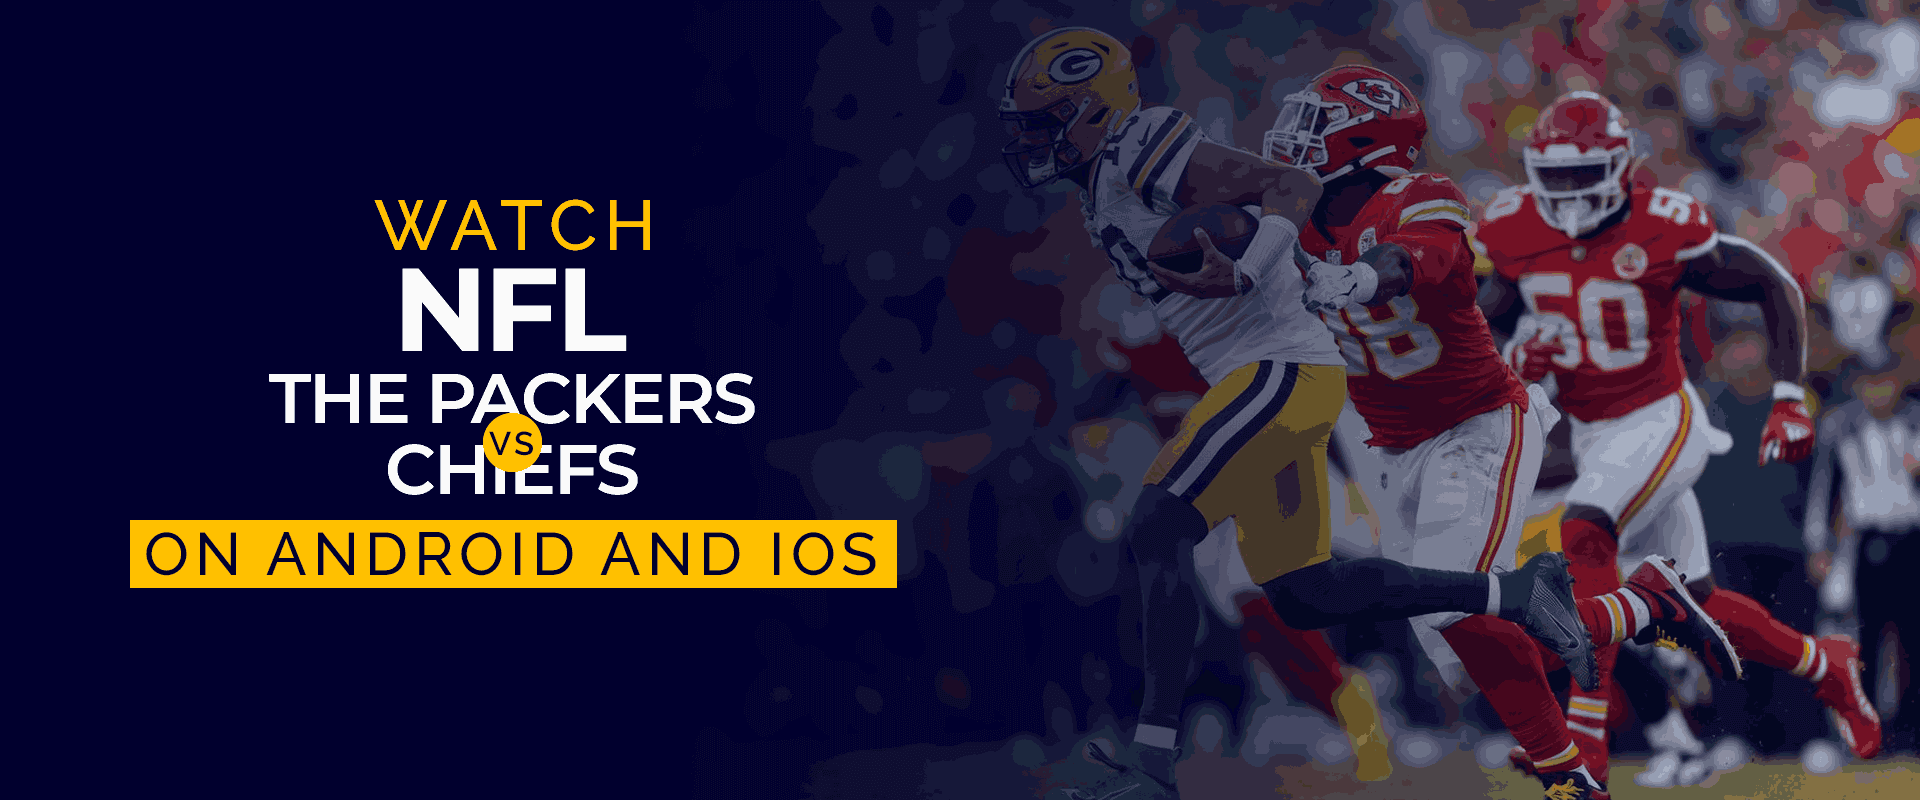 Oglądaj NFL The Packers Vs Chiefs na Androidzie i iOS